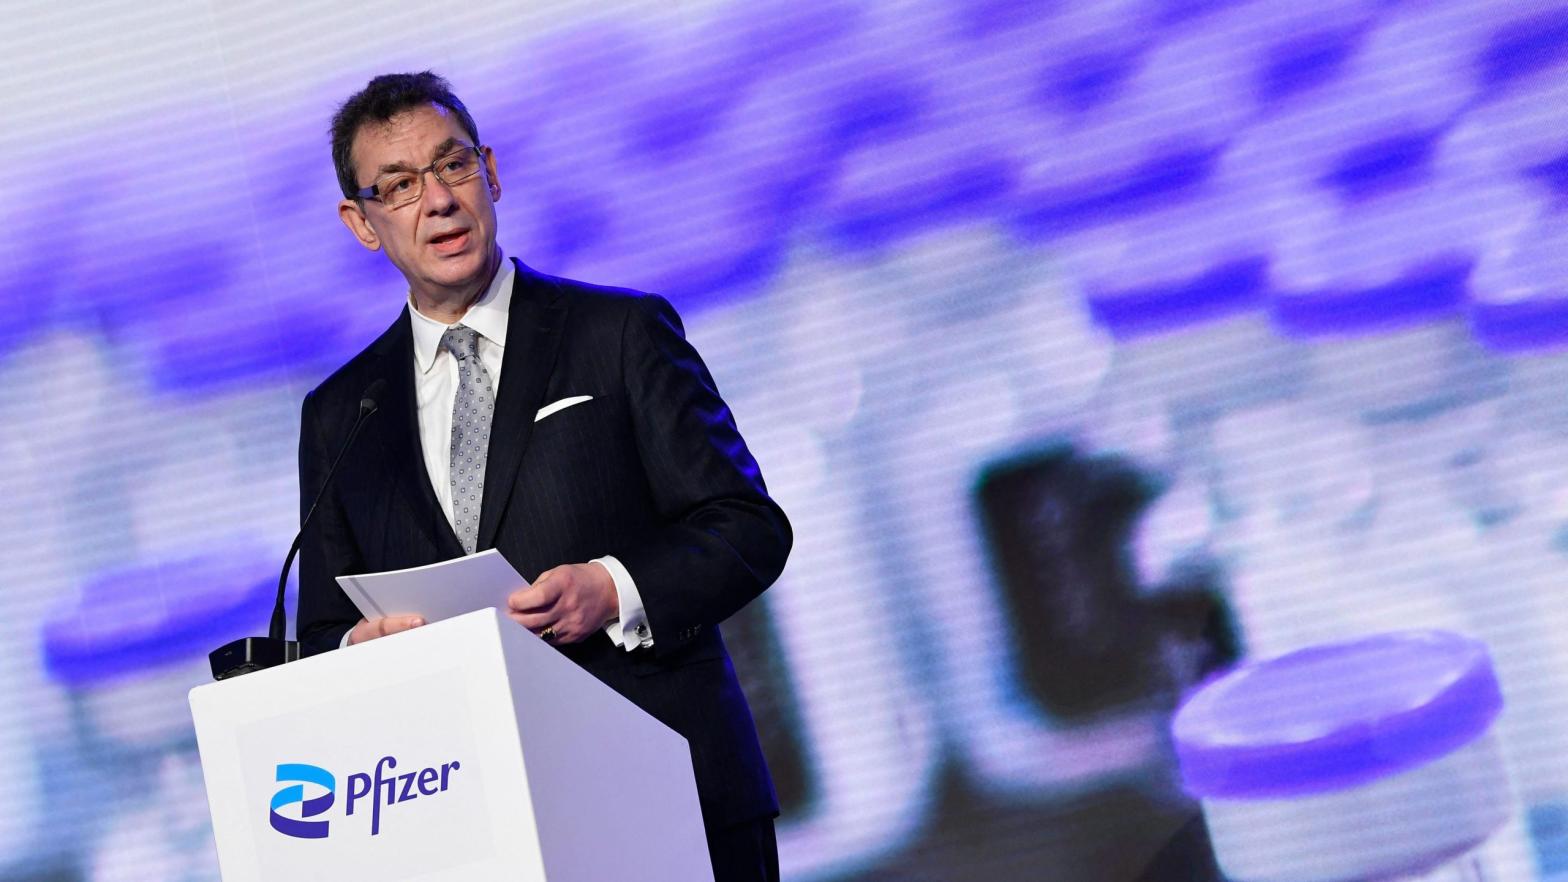 Pfizer CEO Albert Bourla in Puurs, Belgium on April 23, 2021. (Photo: John Thys, Getty Images)